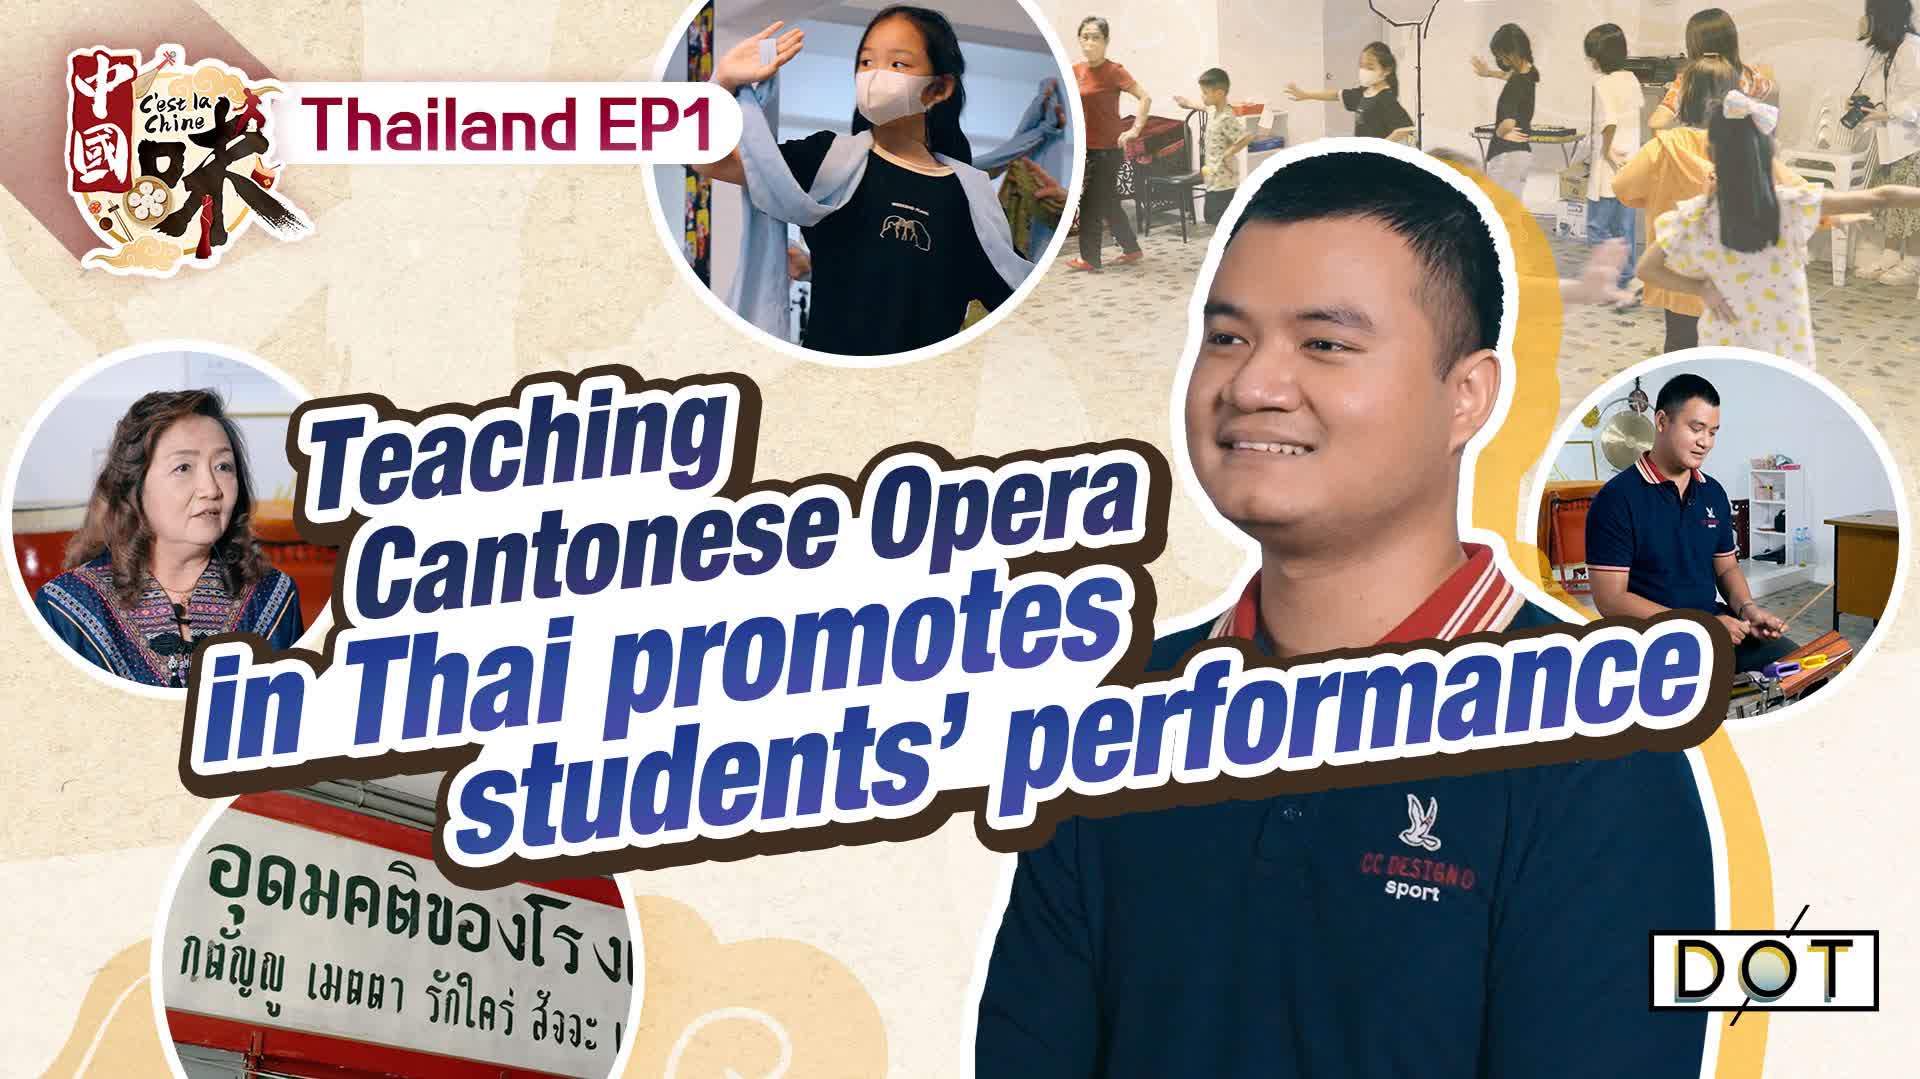 C'est la Chine · Thailand | Teaching Cantonese opera in Thai promotes students' performance